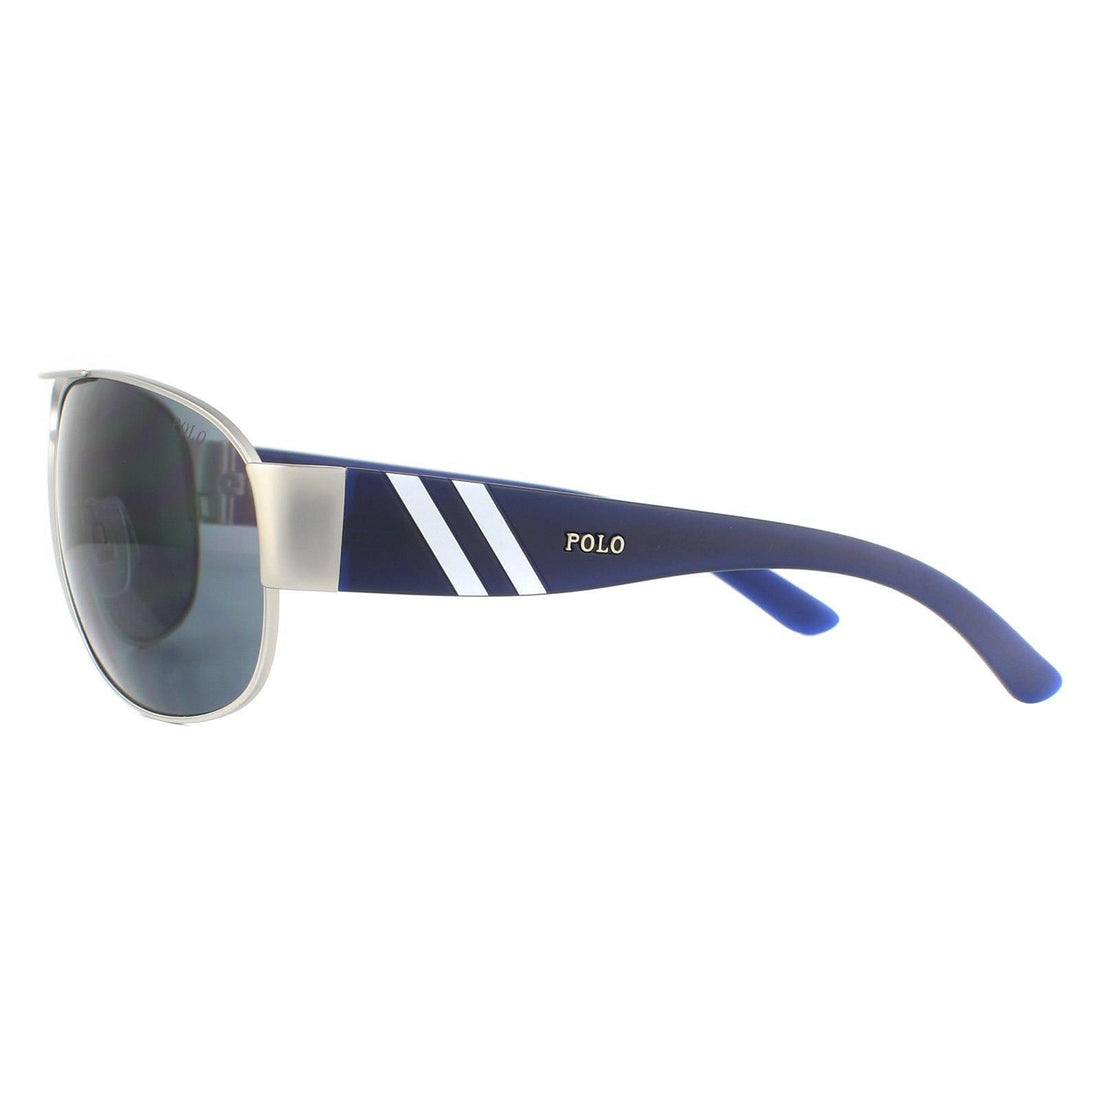 Polo Ralph Lauren Sunglasses PH3052 904687 Matte Silver and Blue Grey